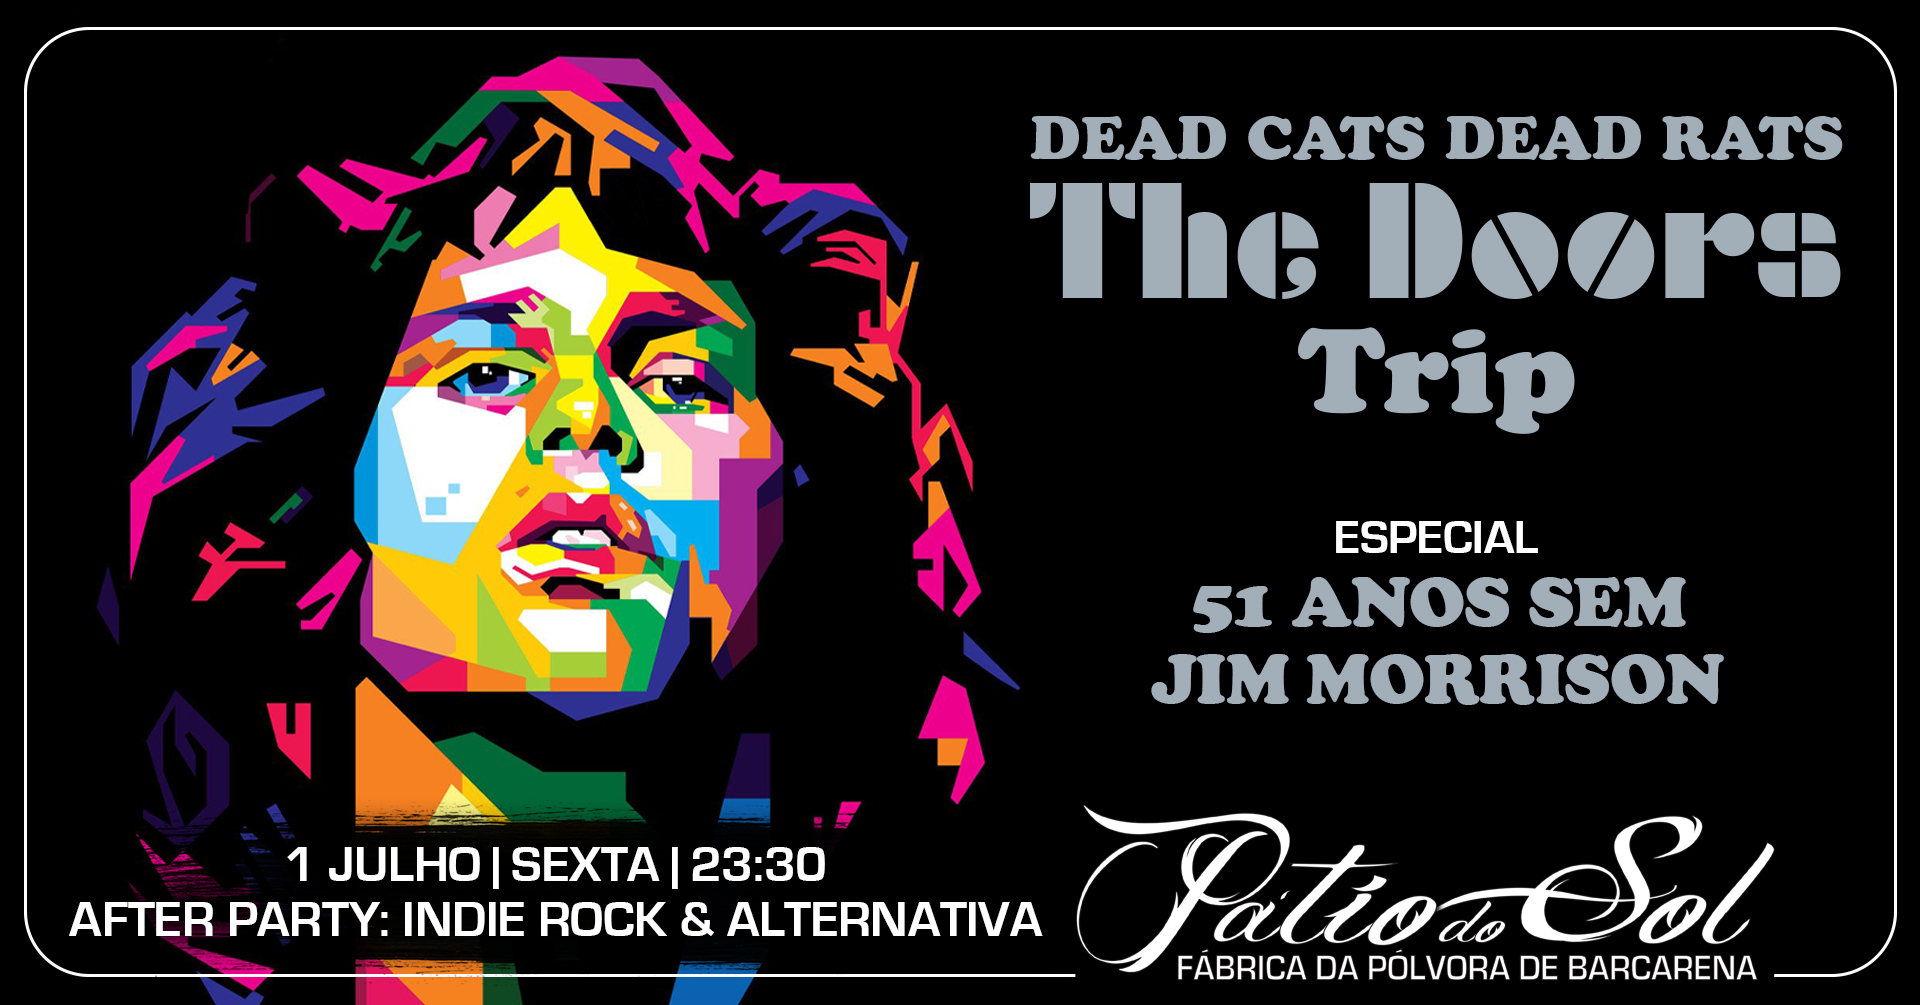 Dead Cats Dead Rats - The Doors Trip | Especial '51 anos sem Jim Morrison' | After Party: Indie Rock